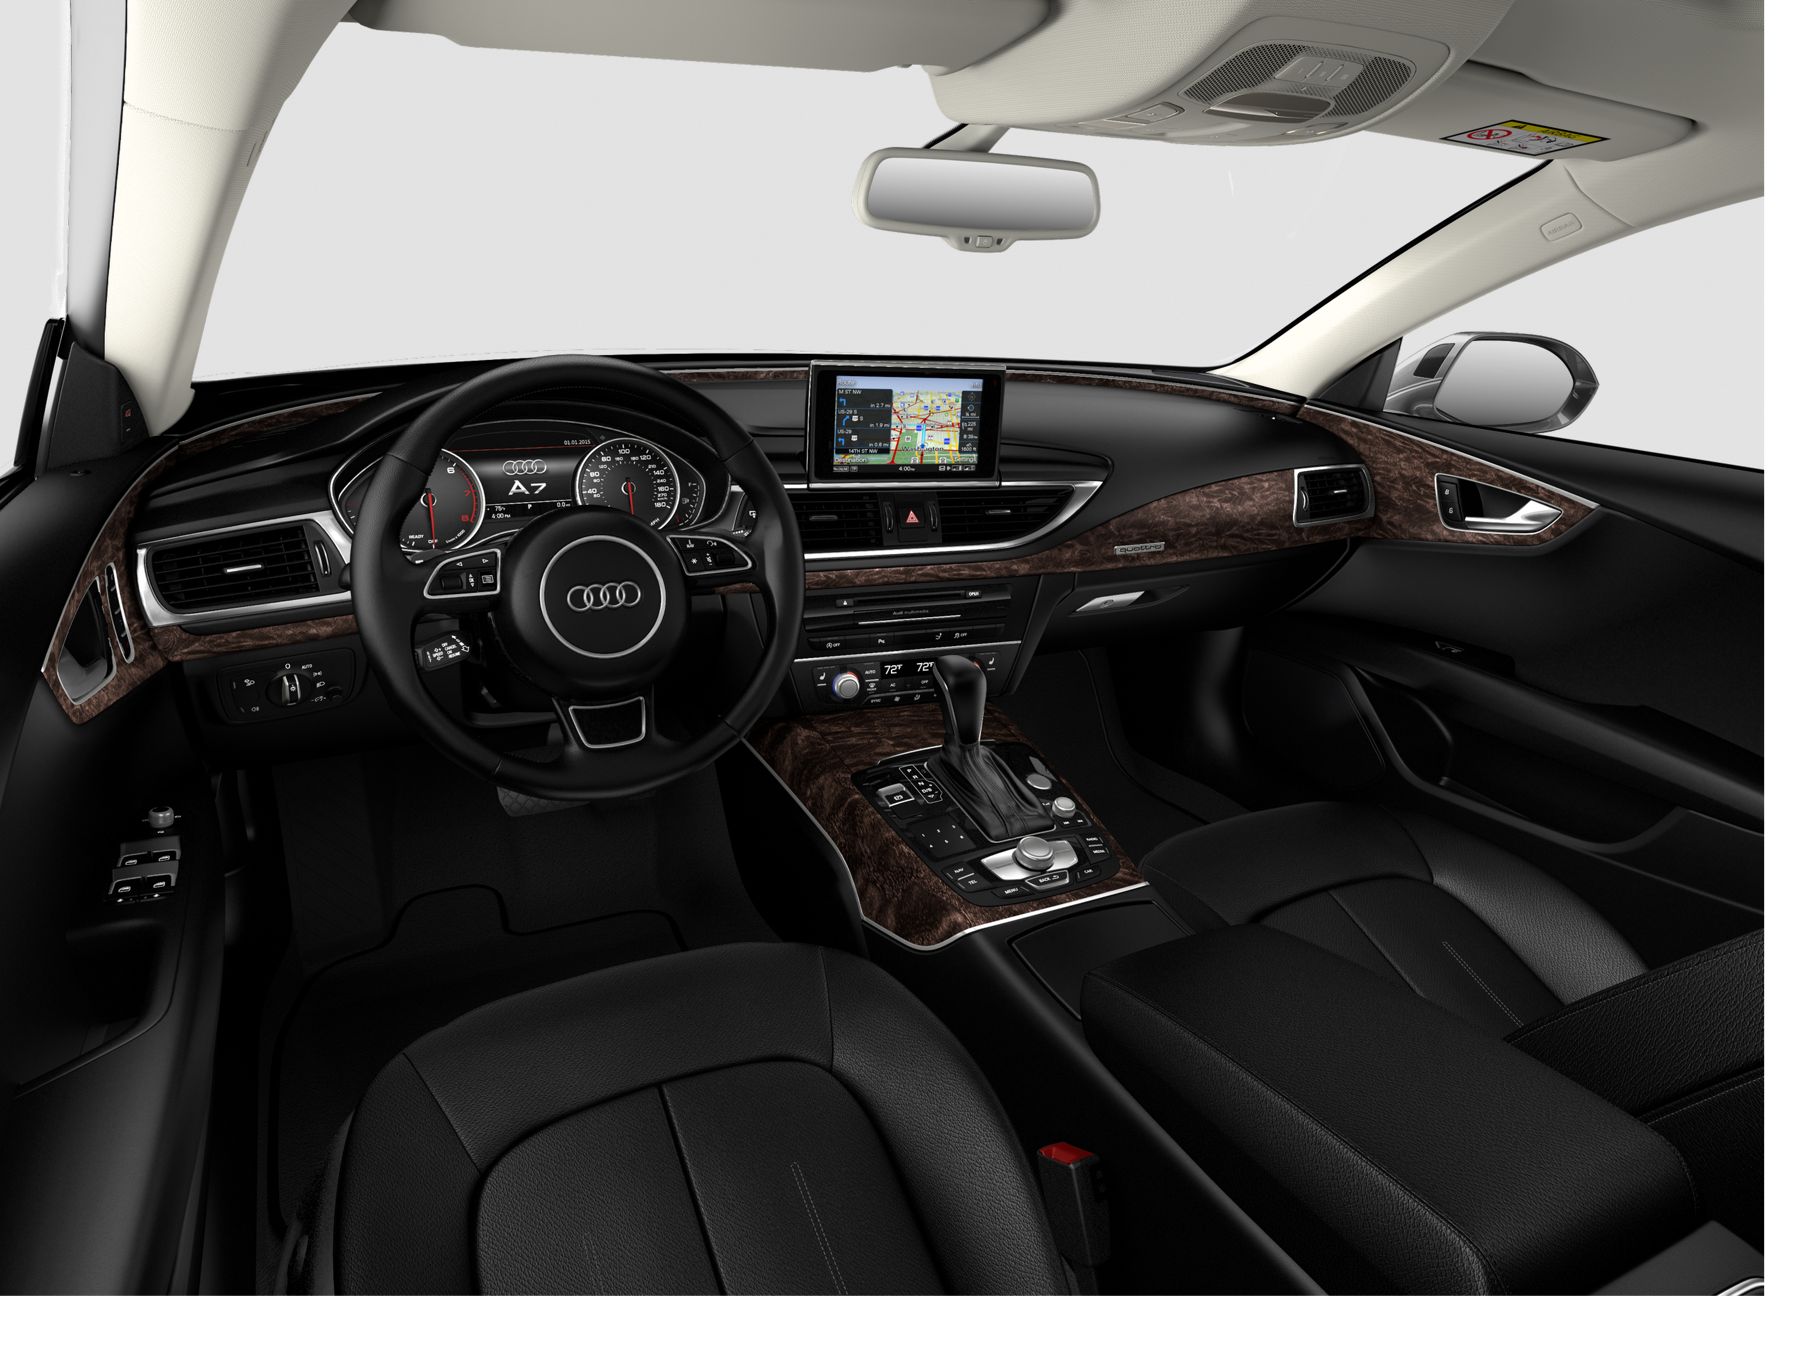 Audi A7 Se Executive interior front view